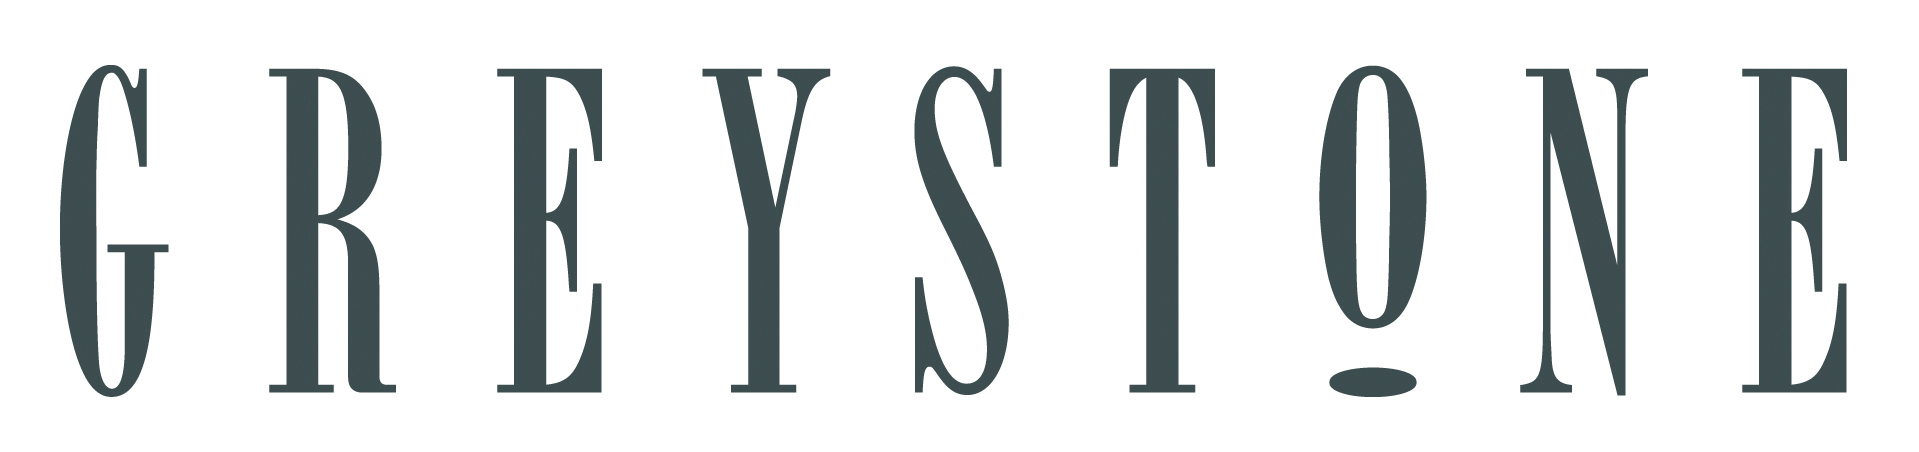 greystone logo